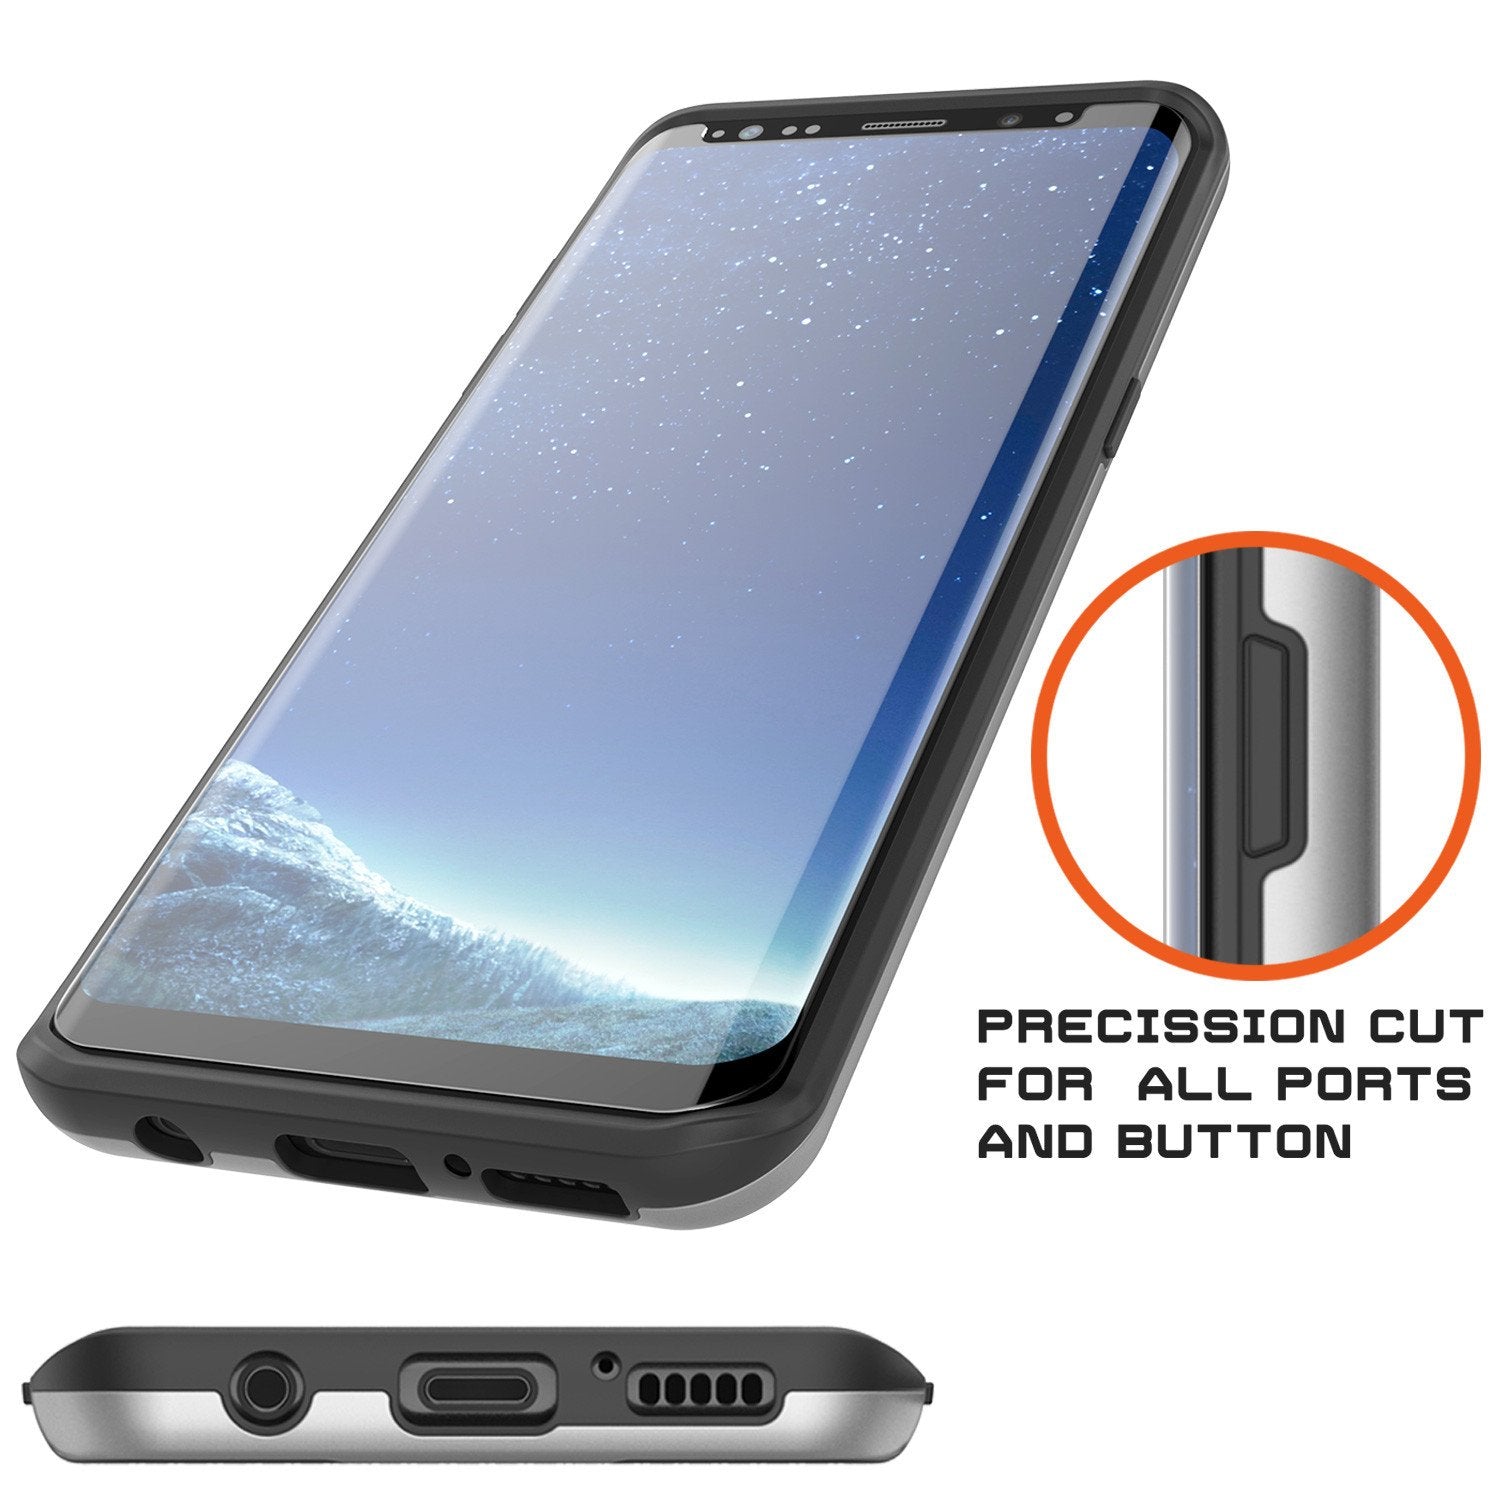 Galaxy S8 Plus Case PunkCase SLOT Silver Series Slim Armor Soft Cover Case